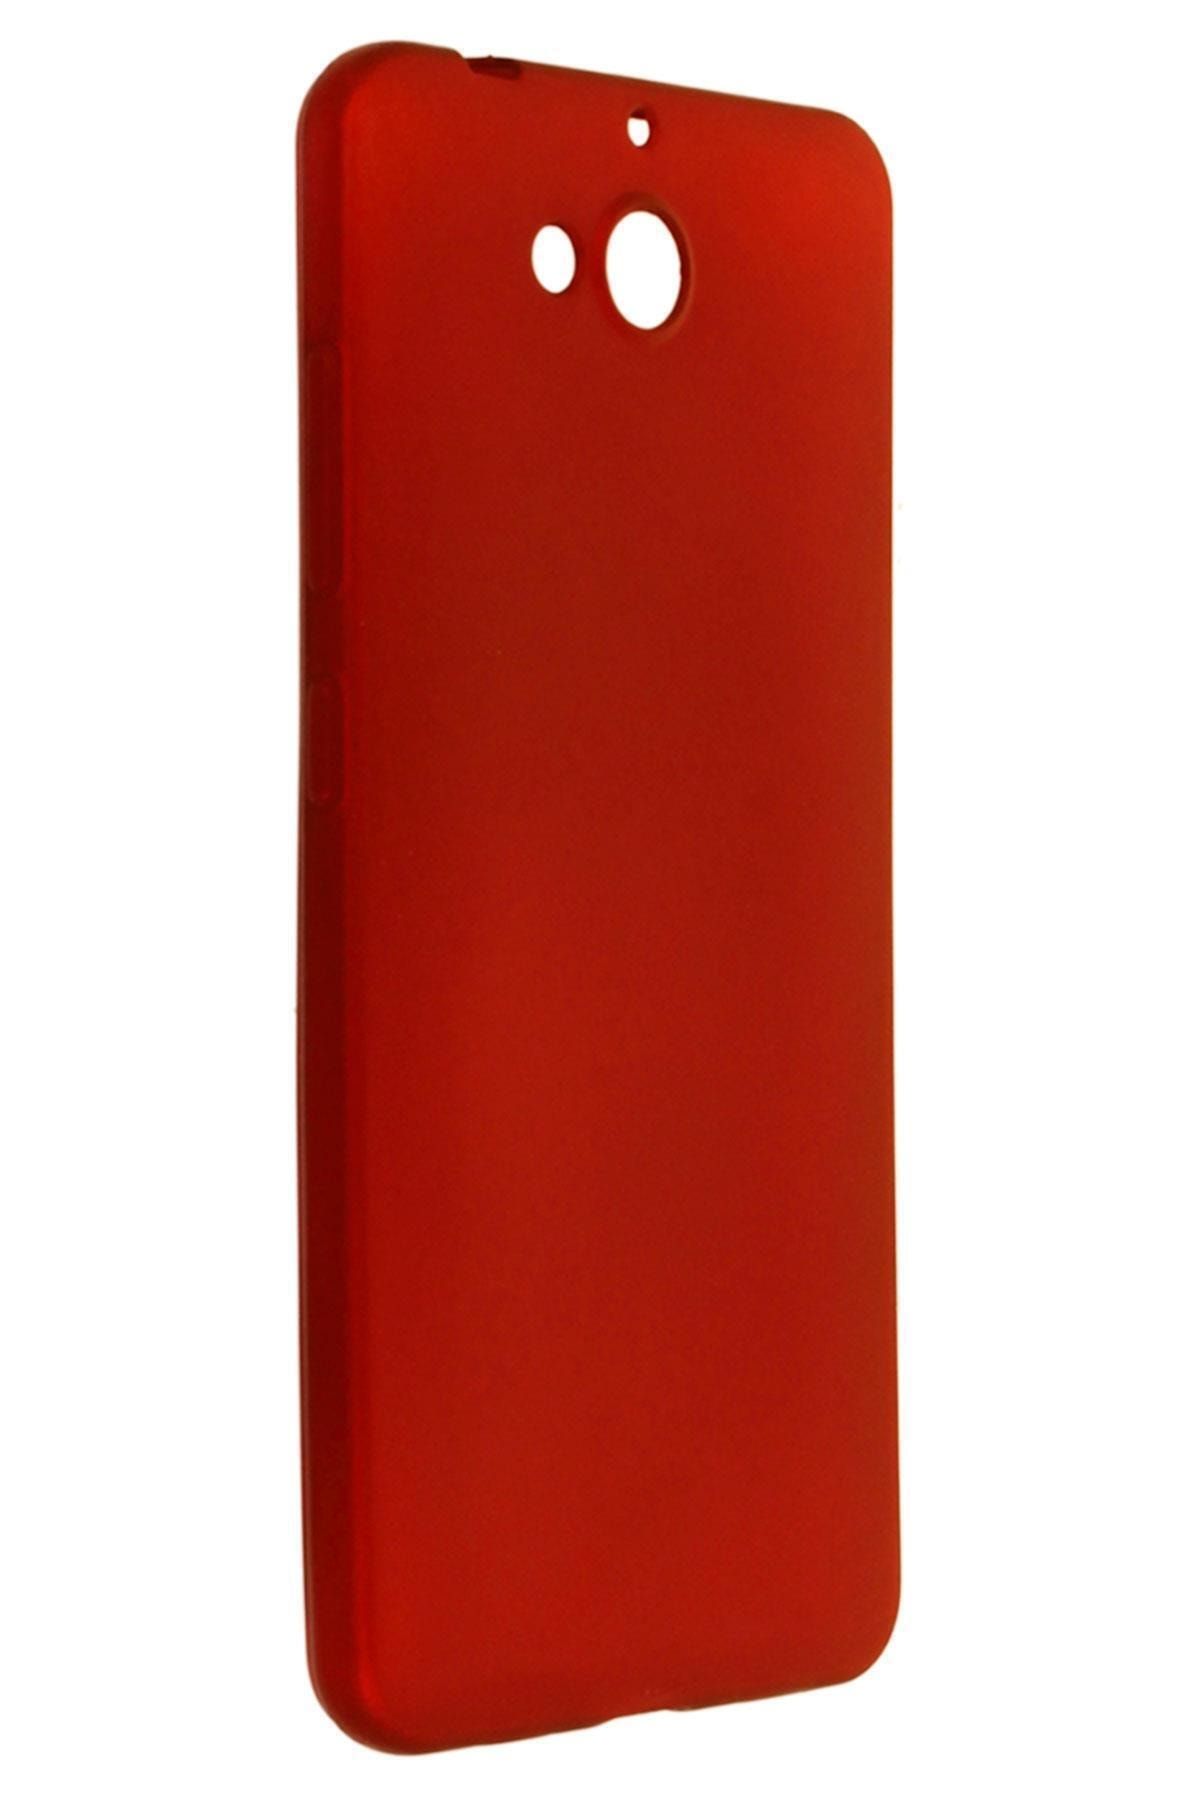 Casper Via A1 Uyumlu Kılıf Premier Renkli Esnek Silikon Kırmızı